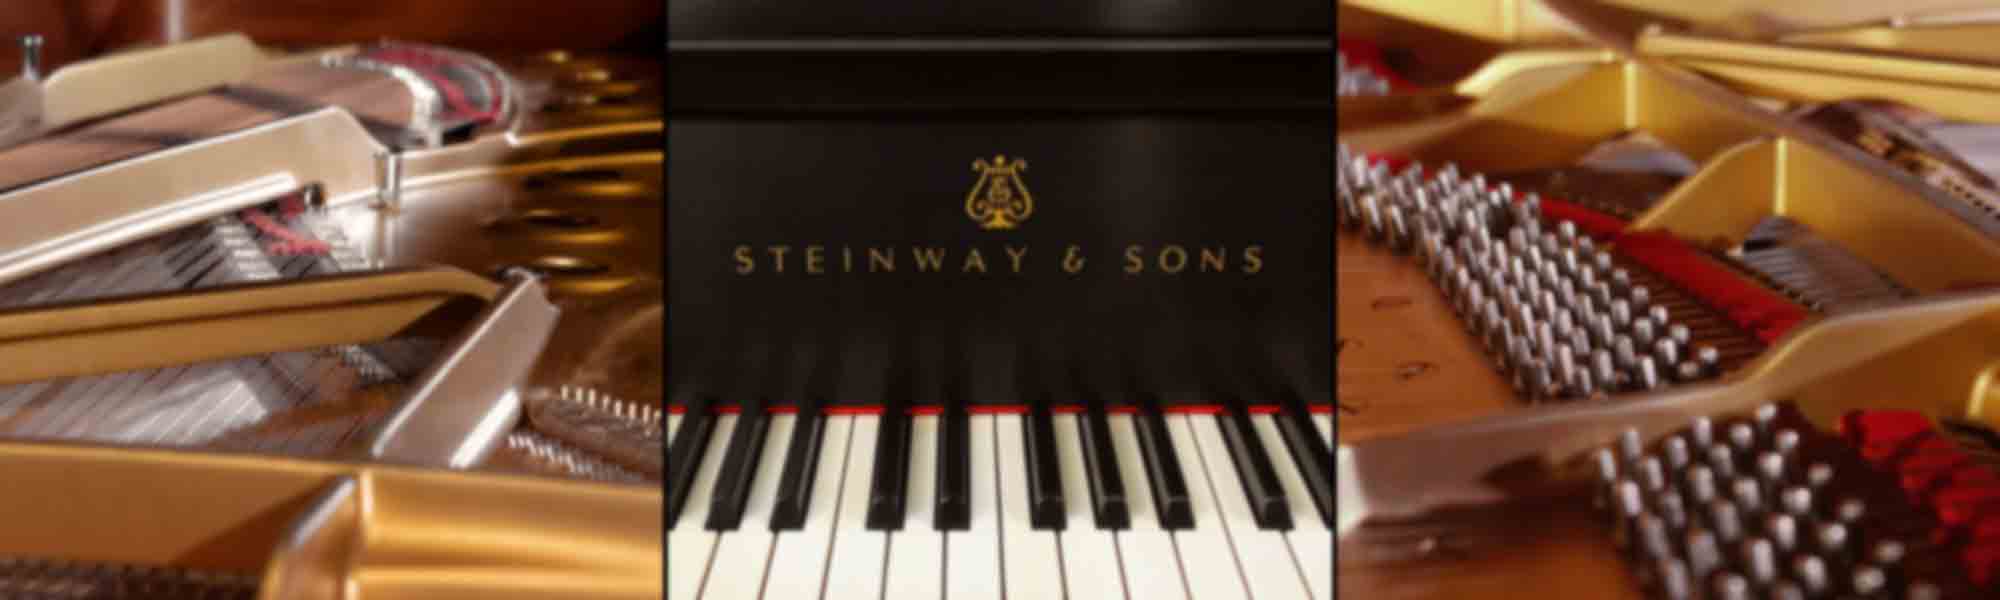 Steinway & Sons New York D-274